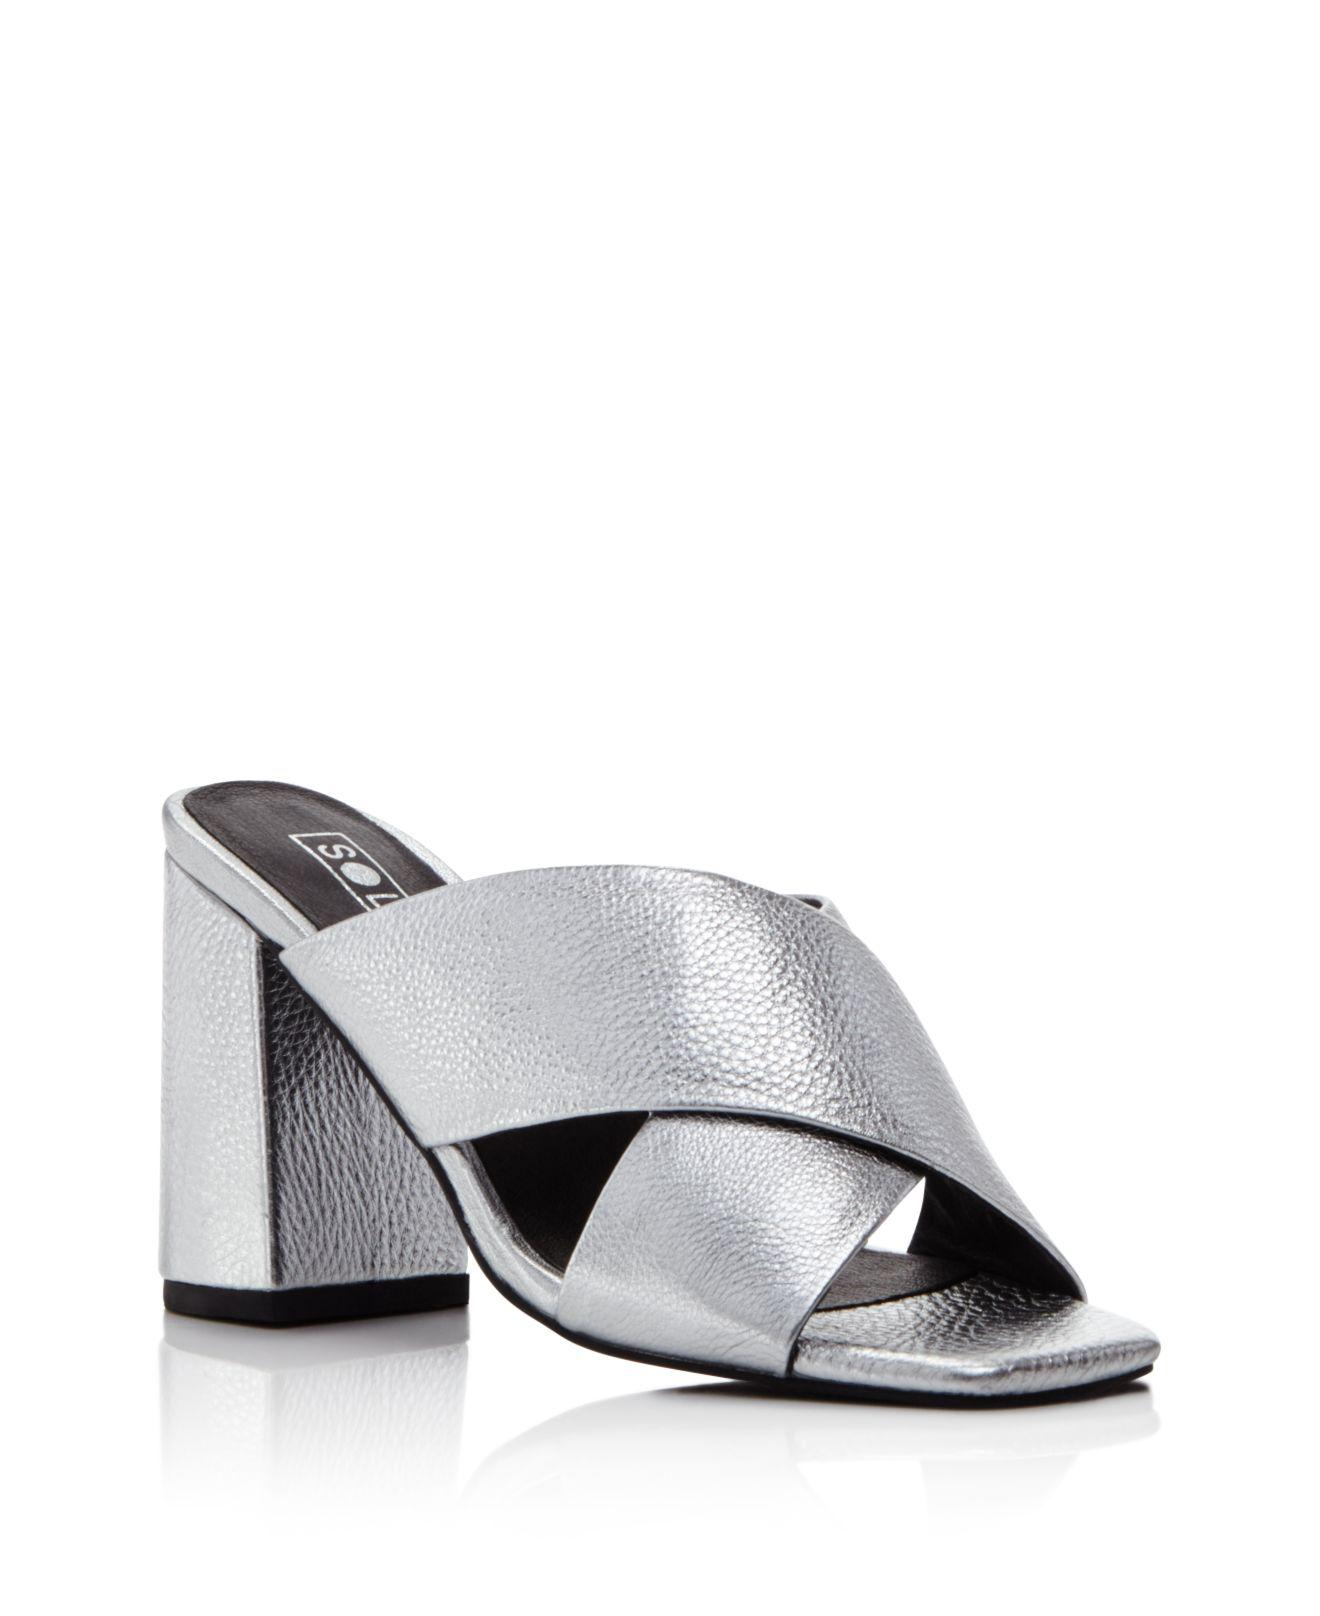 Lyst - Sol Sana Ginny Metallic Leather High Heel Slide Sandals in Metallic